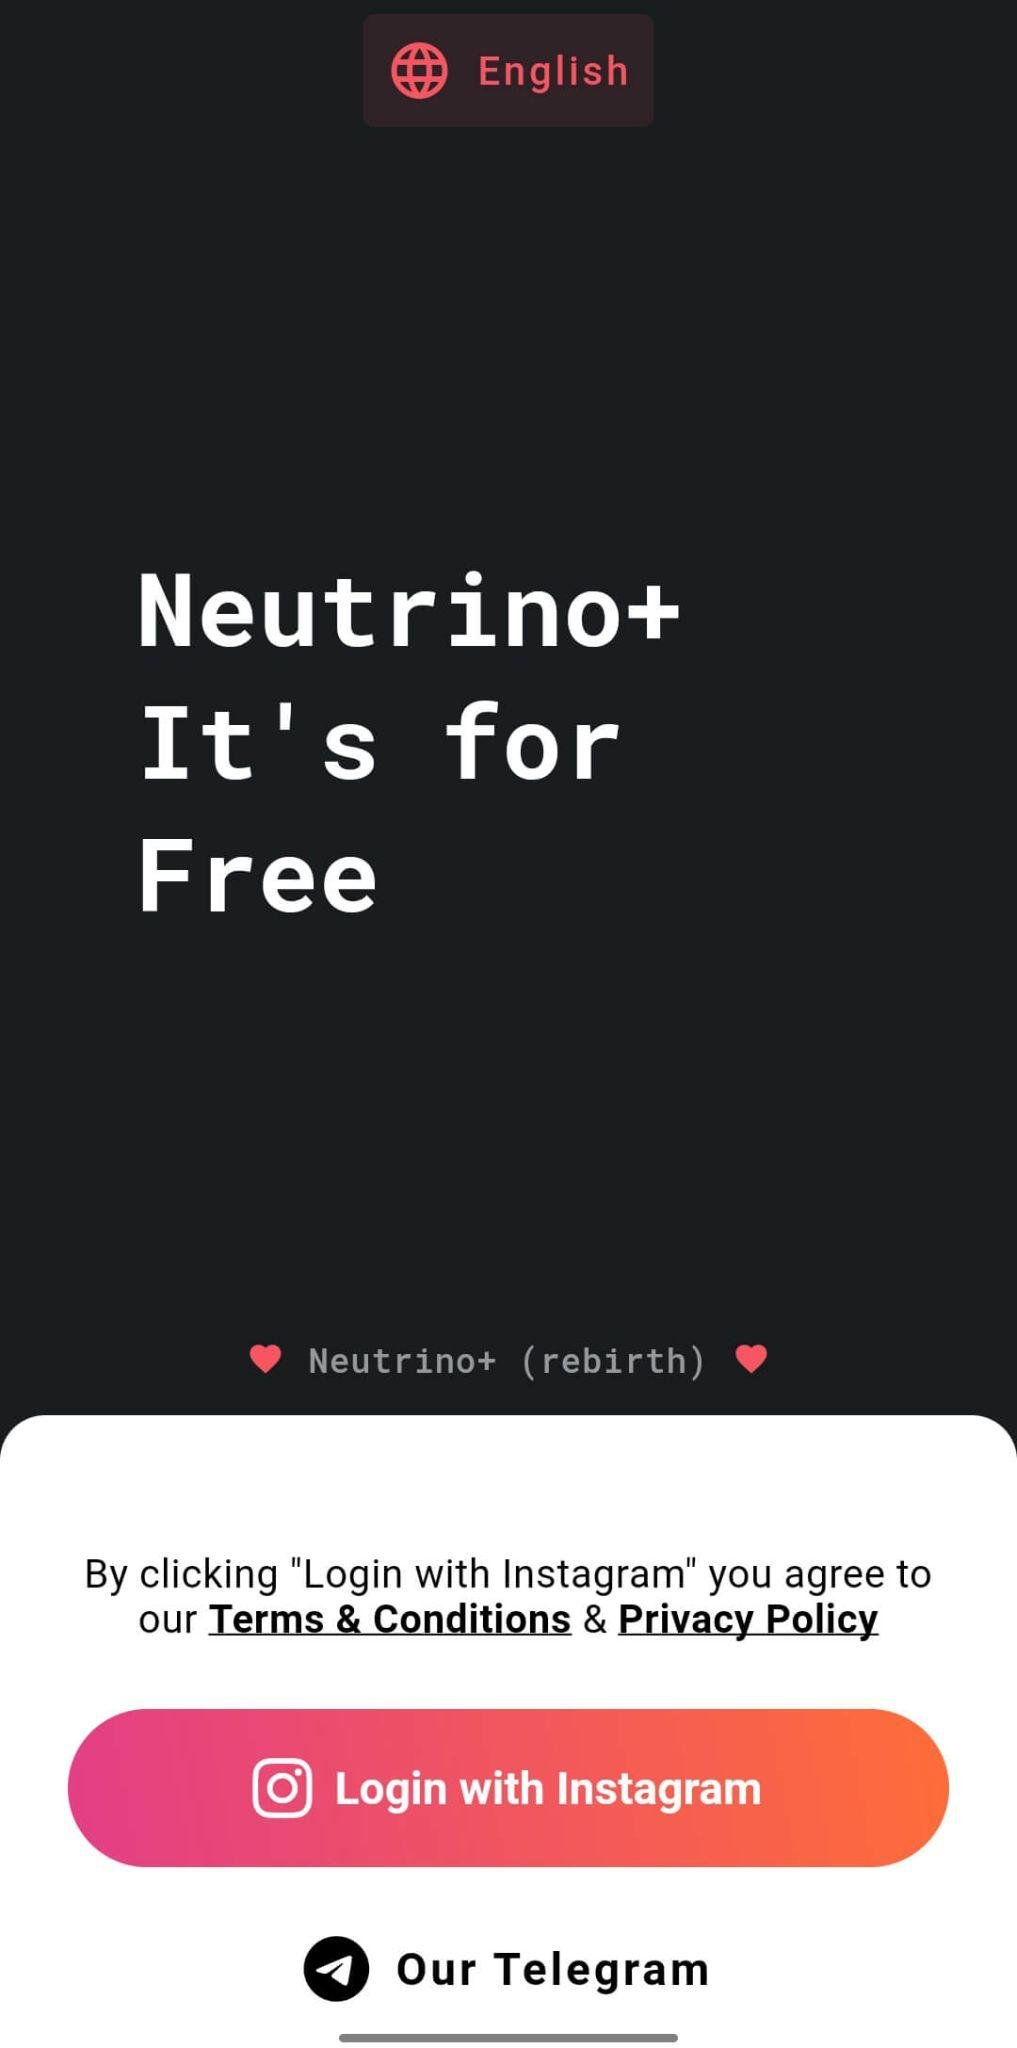 neutrino+ first